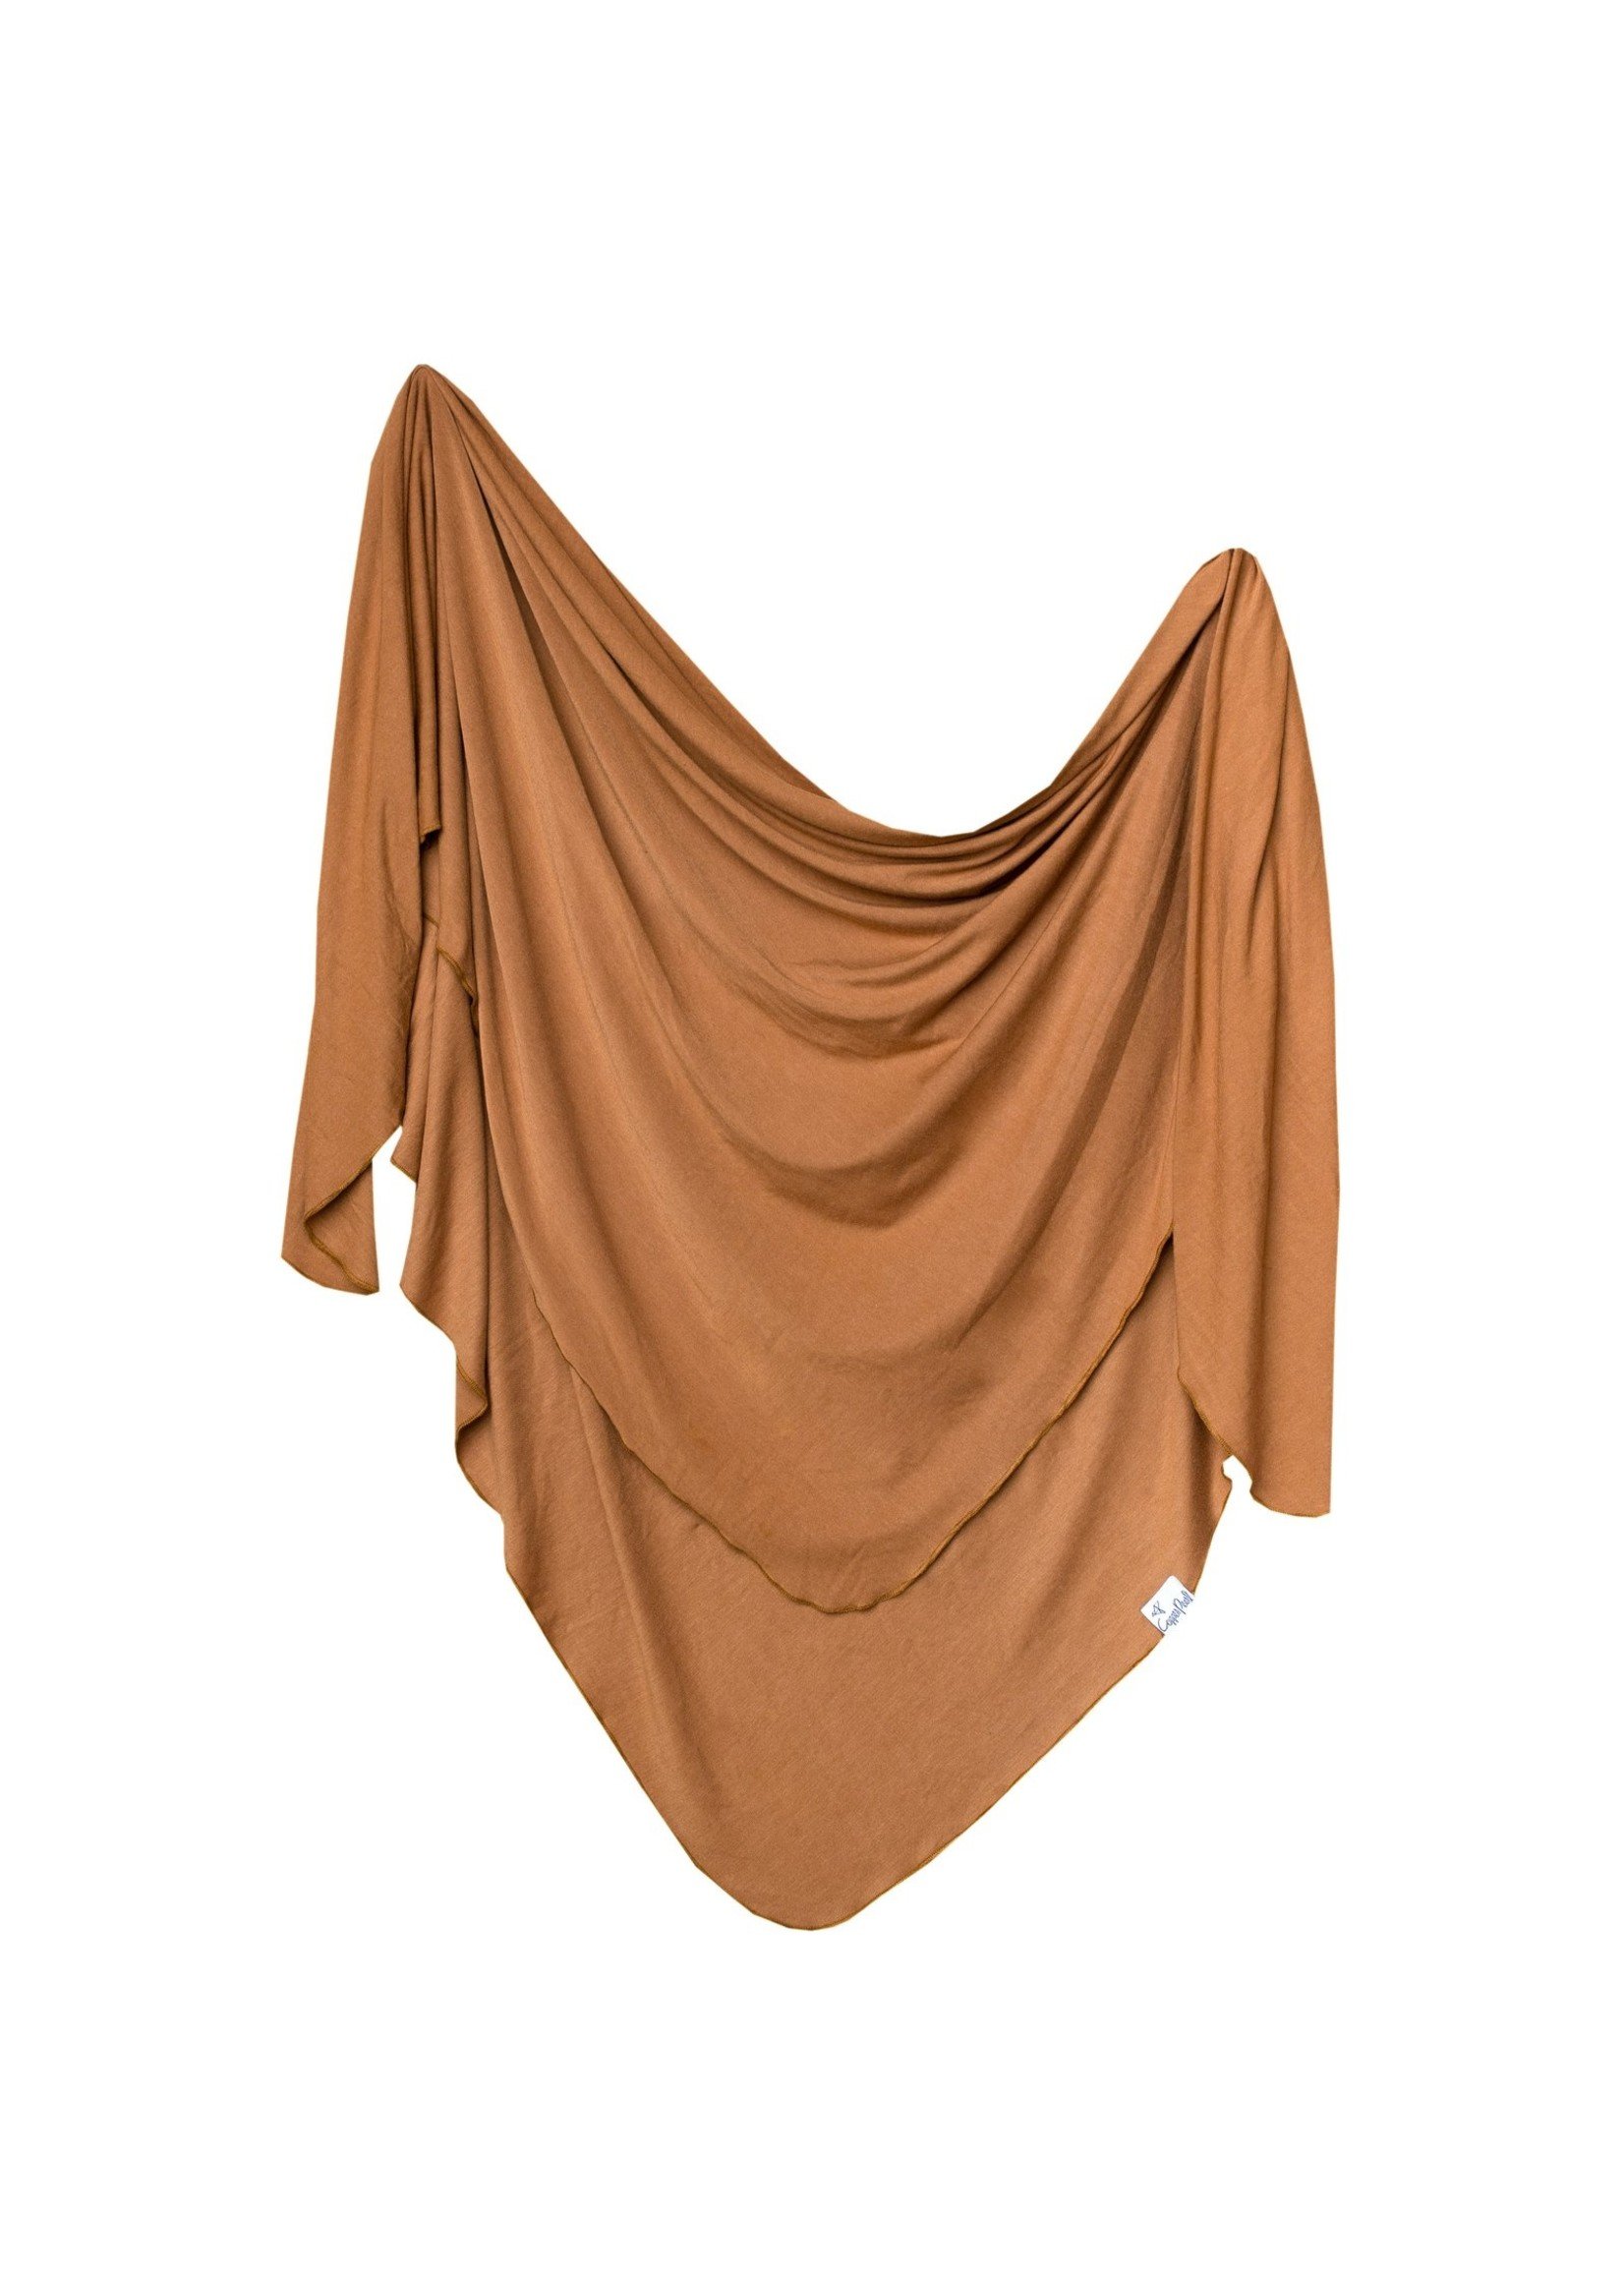 Copper pearl Swaddle Blanket - Camel